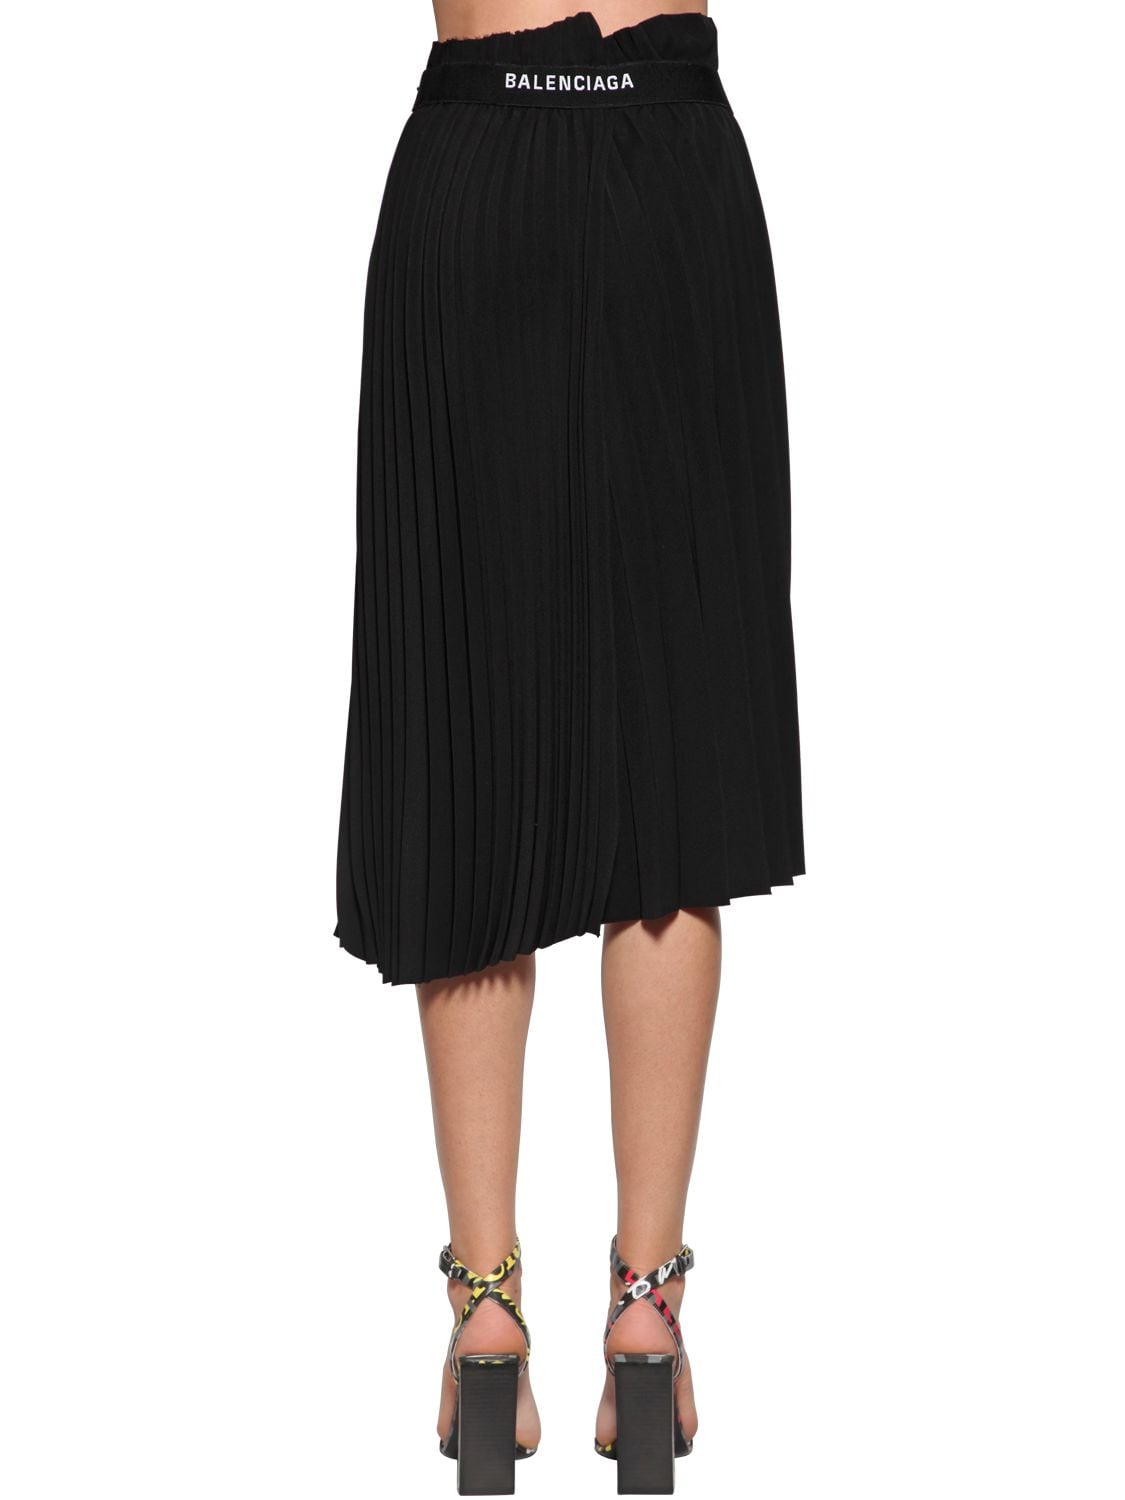 Sprede Sømand George Eliot Balenciaga Logo Elastic Pleated Skirt In Black | ModeSens